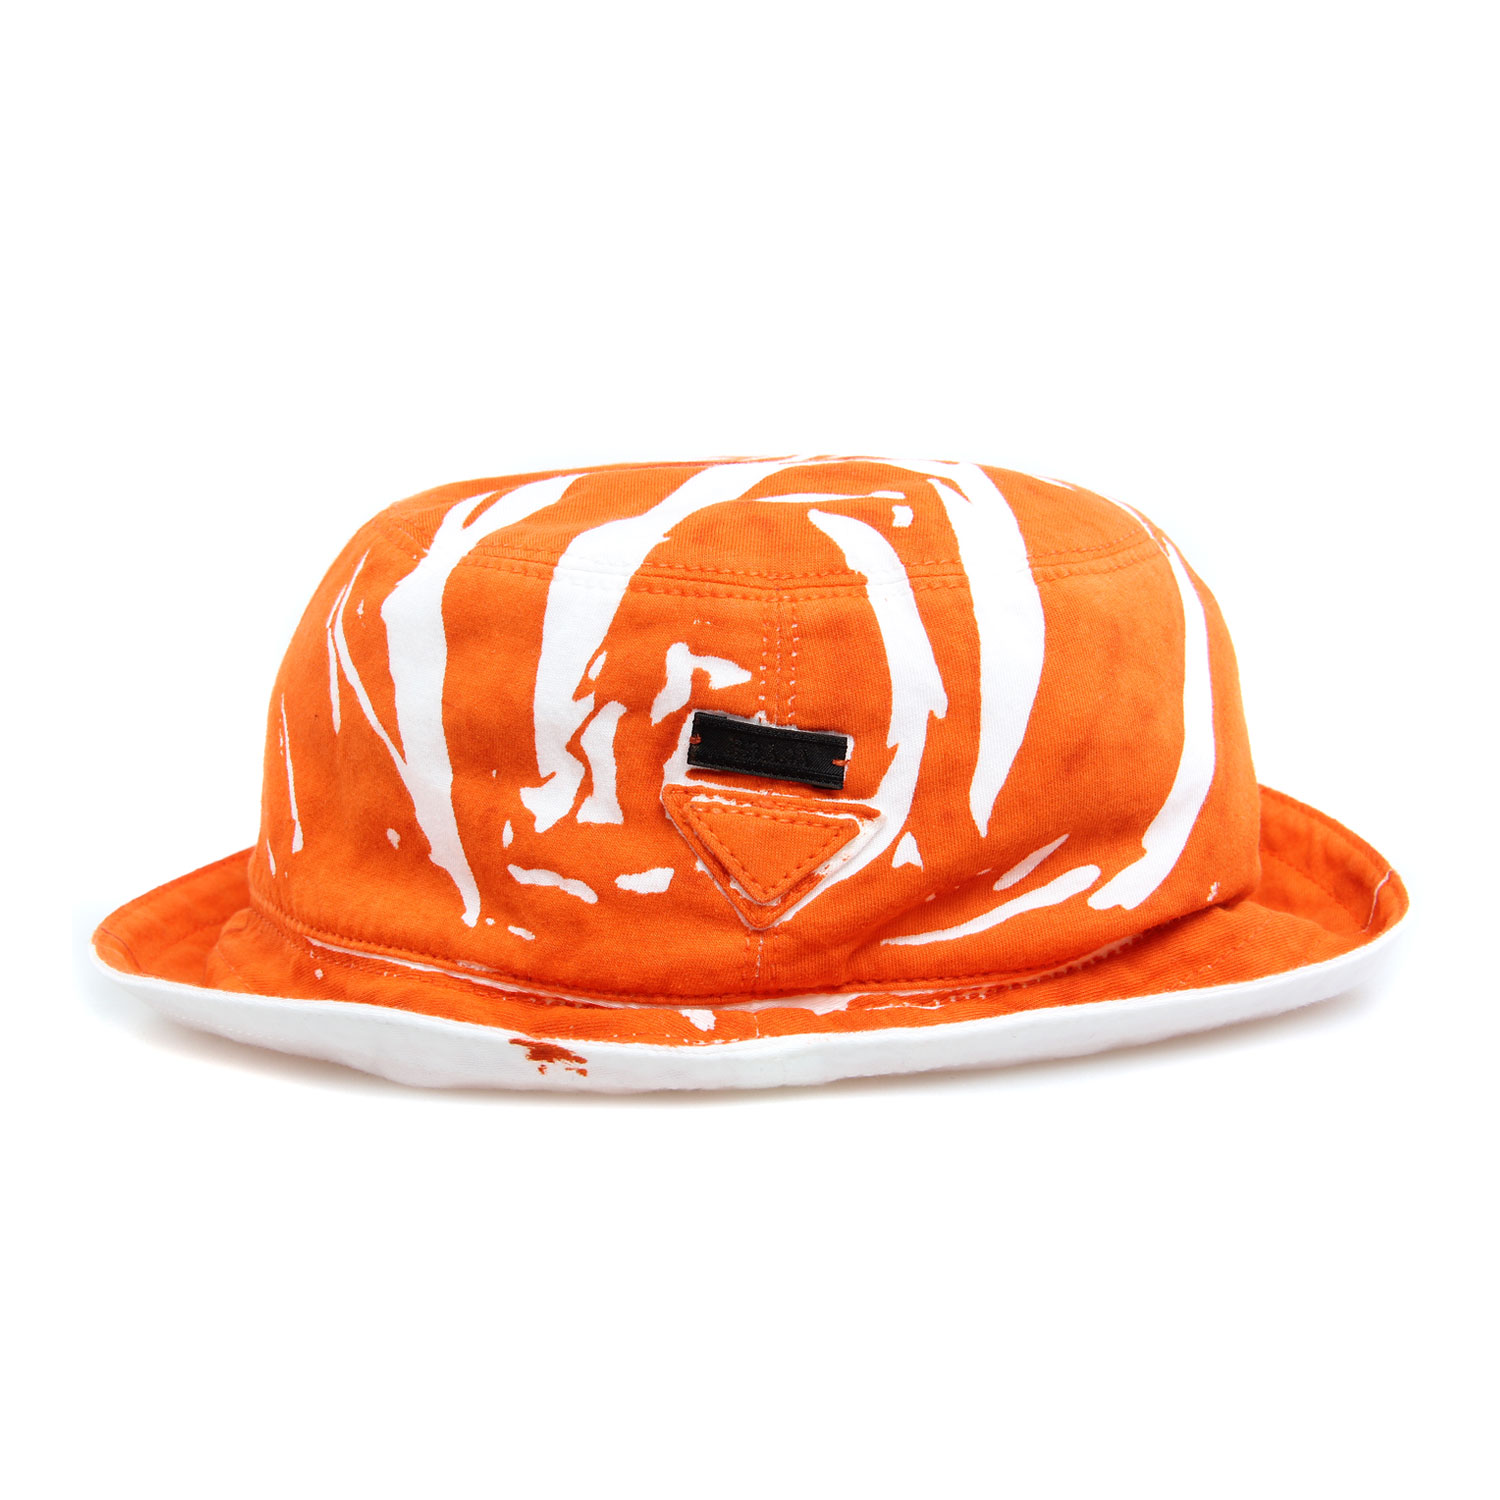 prada(普拉达)女士橘色太阳帽